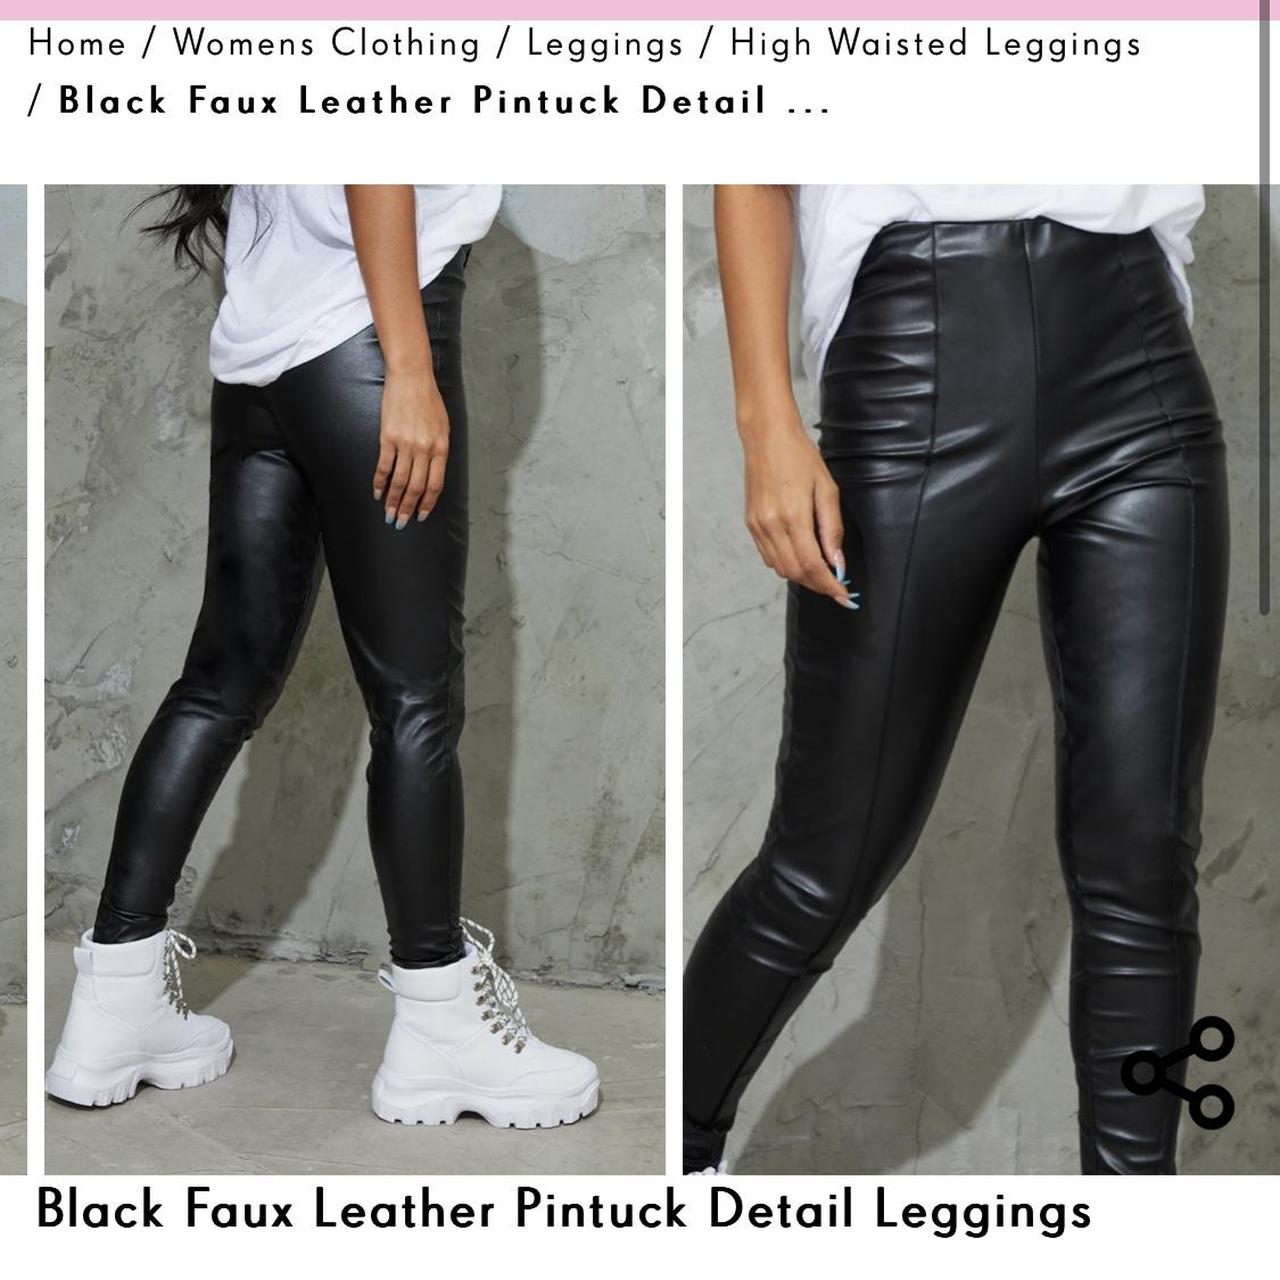 Black Faux Leather Pintuck Detail Leggings